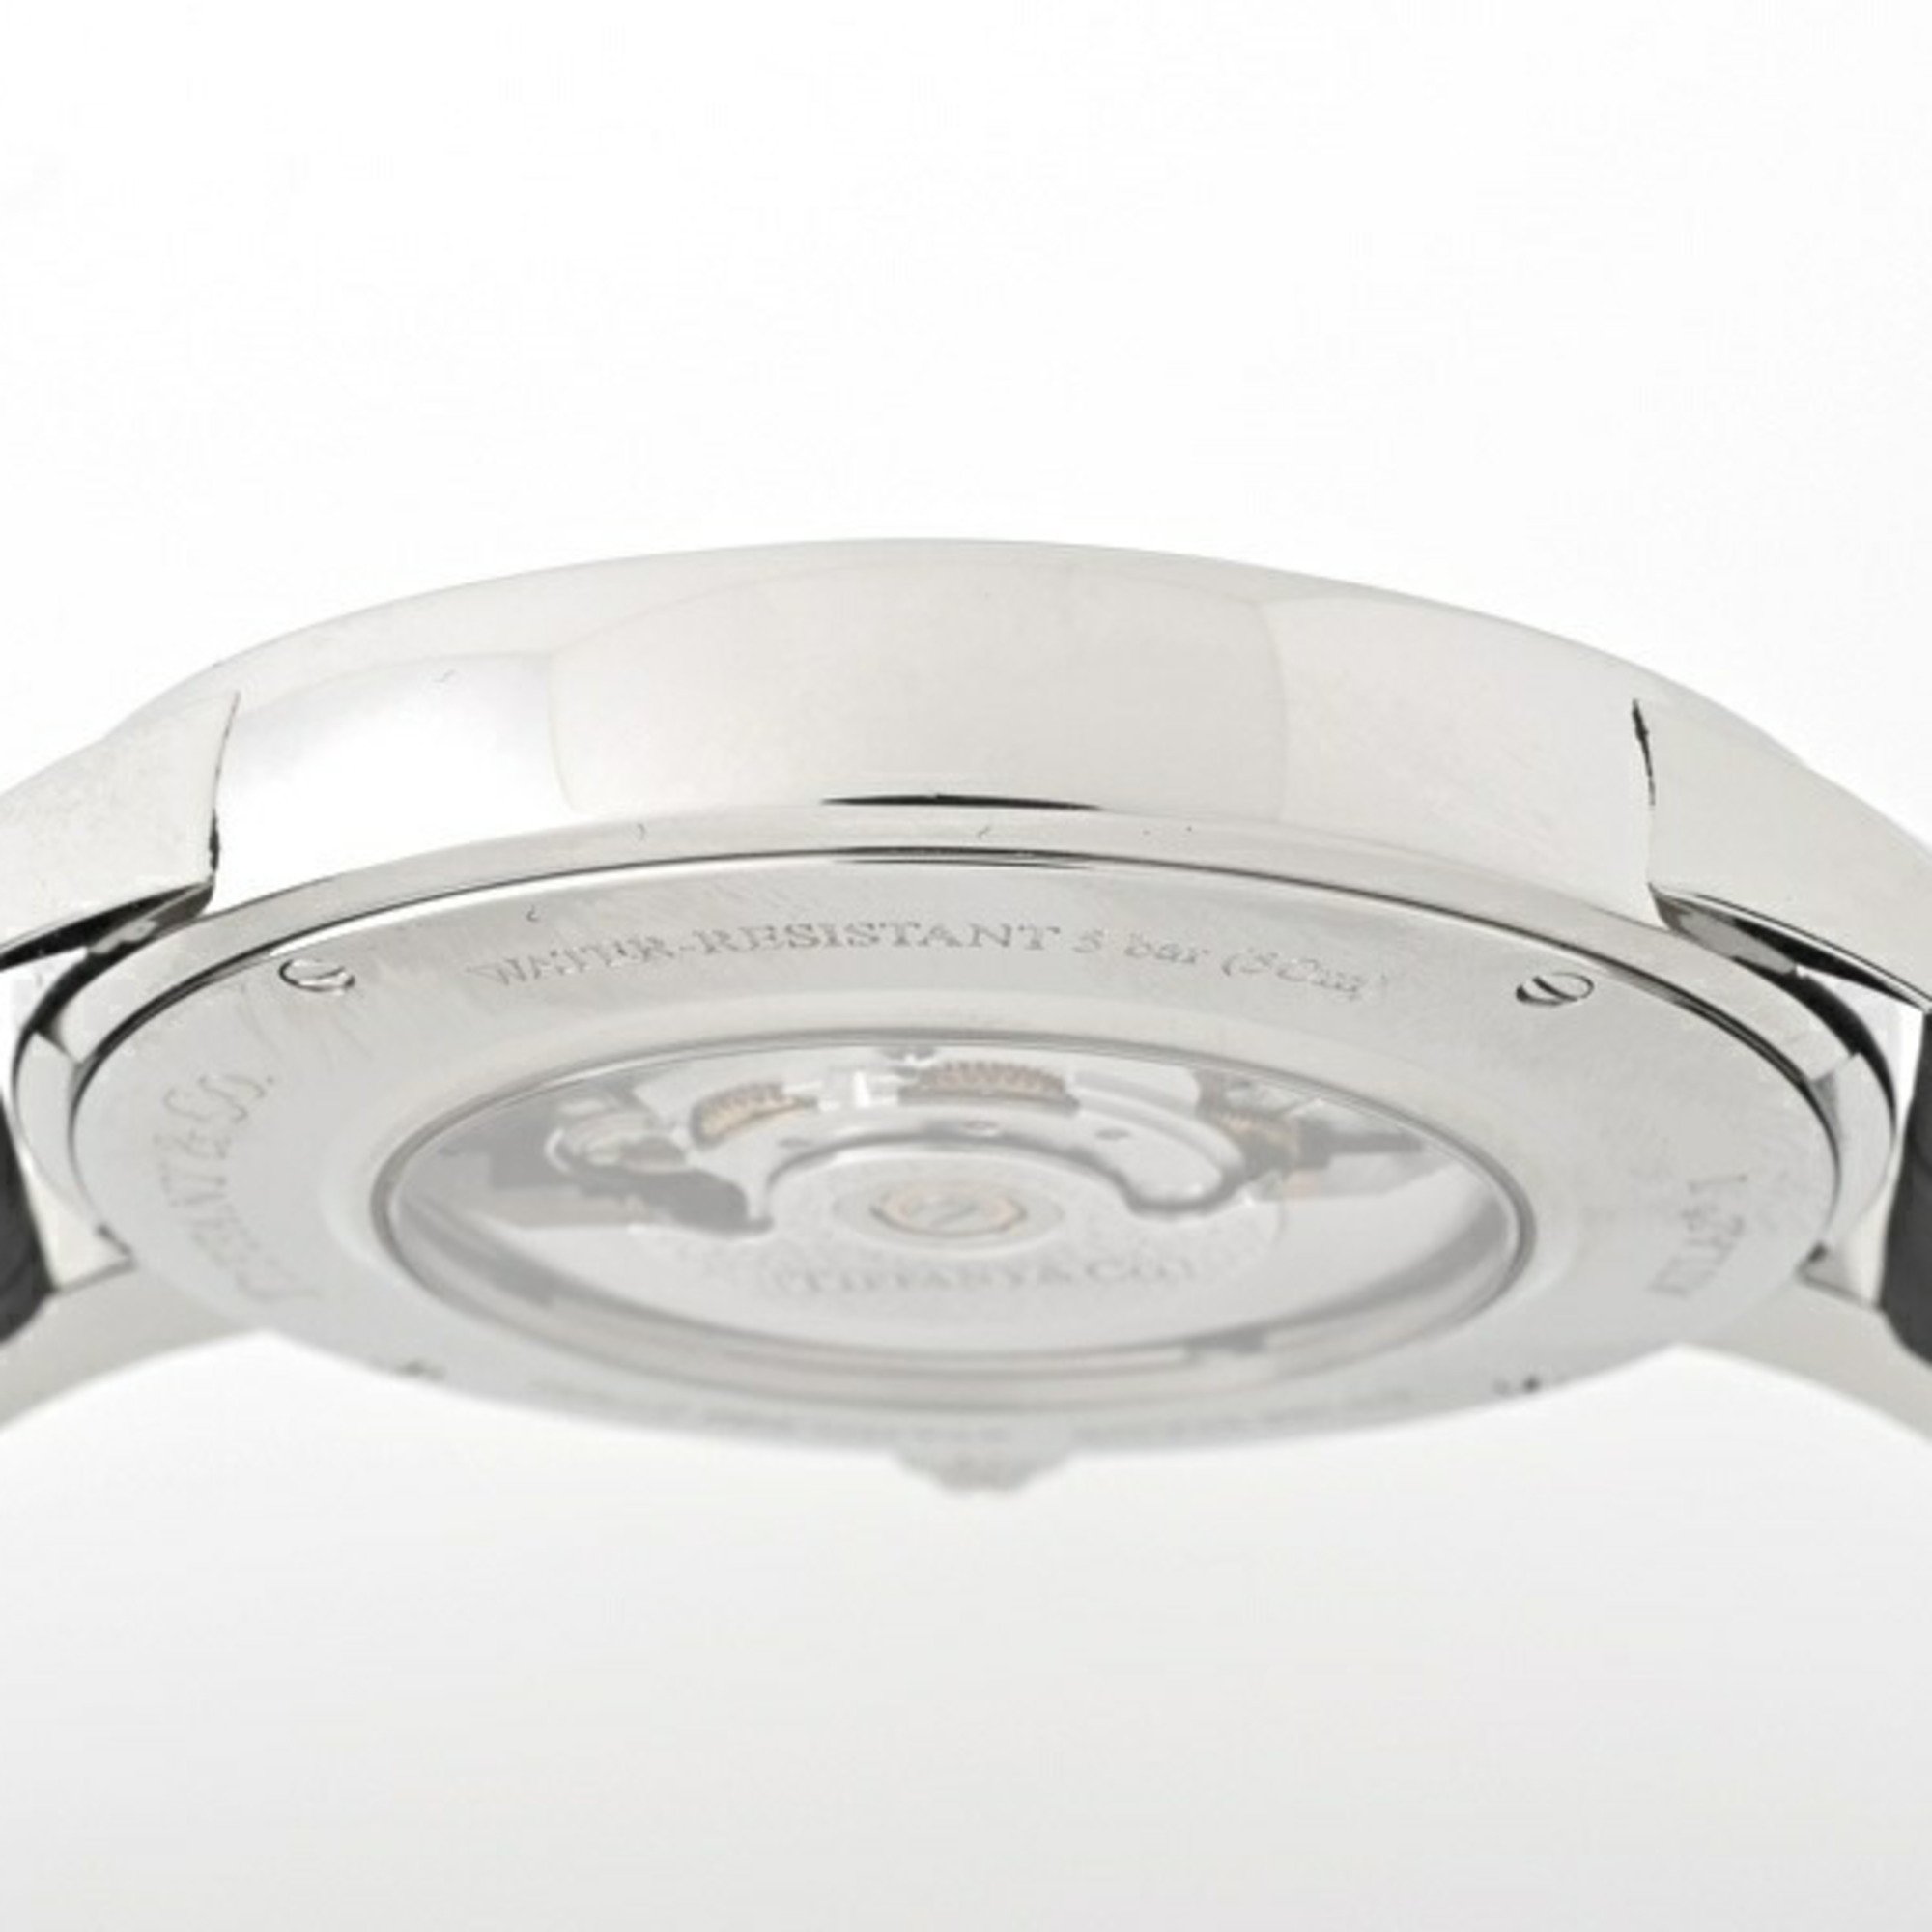 Tiffany Atlas Dome Date Z1810.68.10A10A50A Automatic Watch 69944